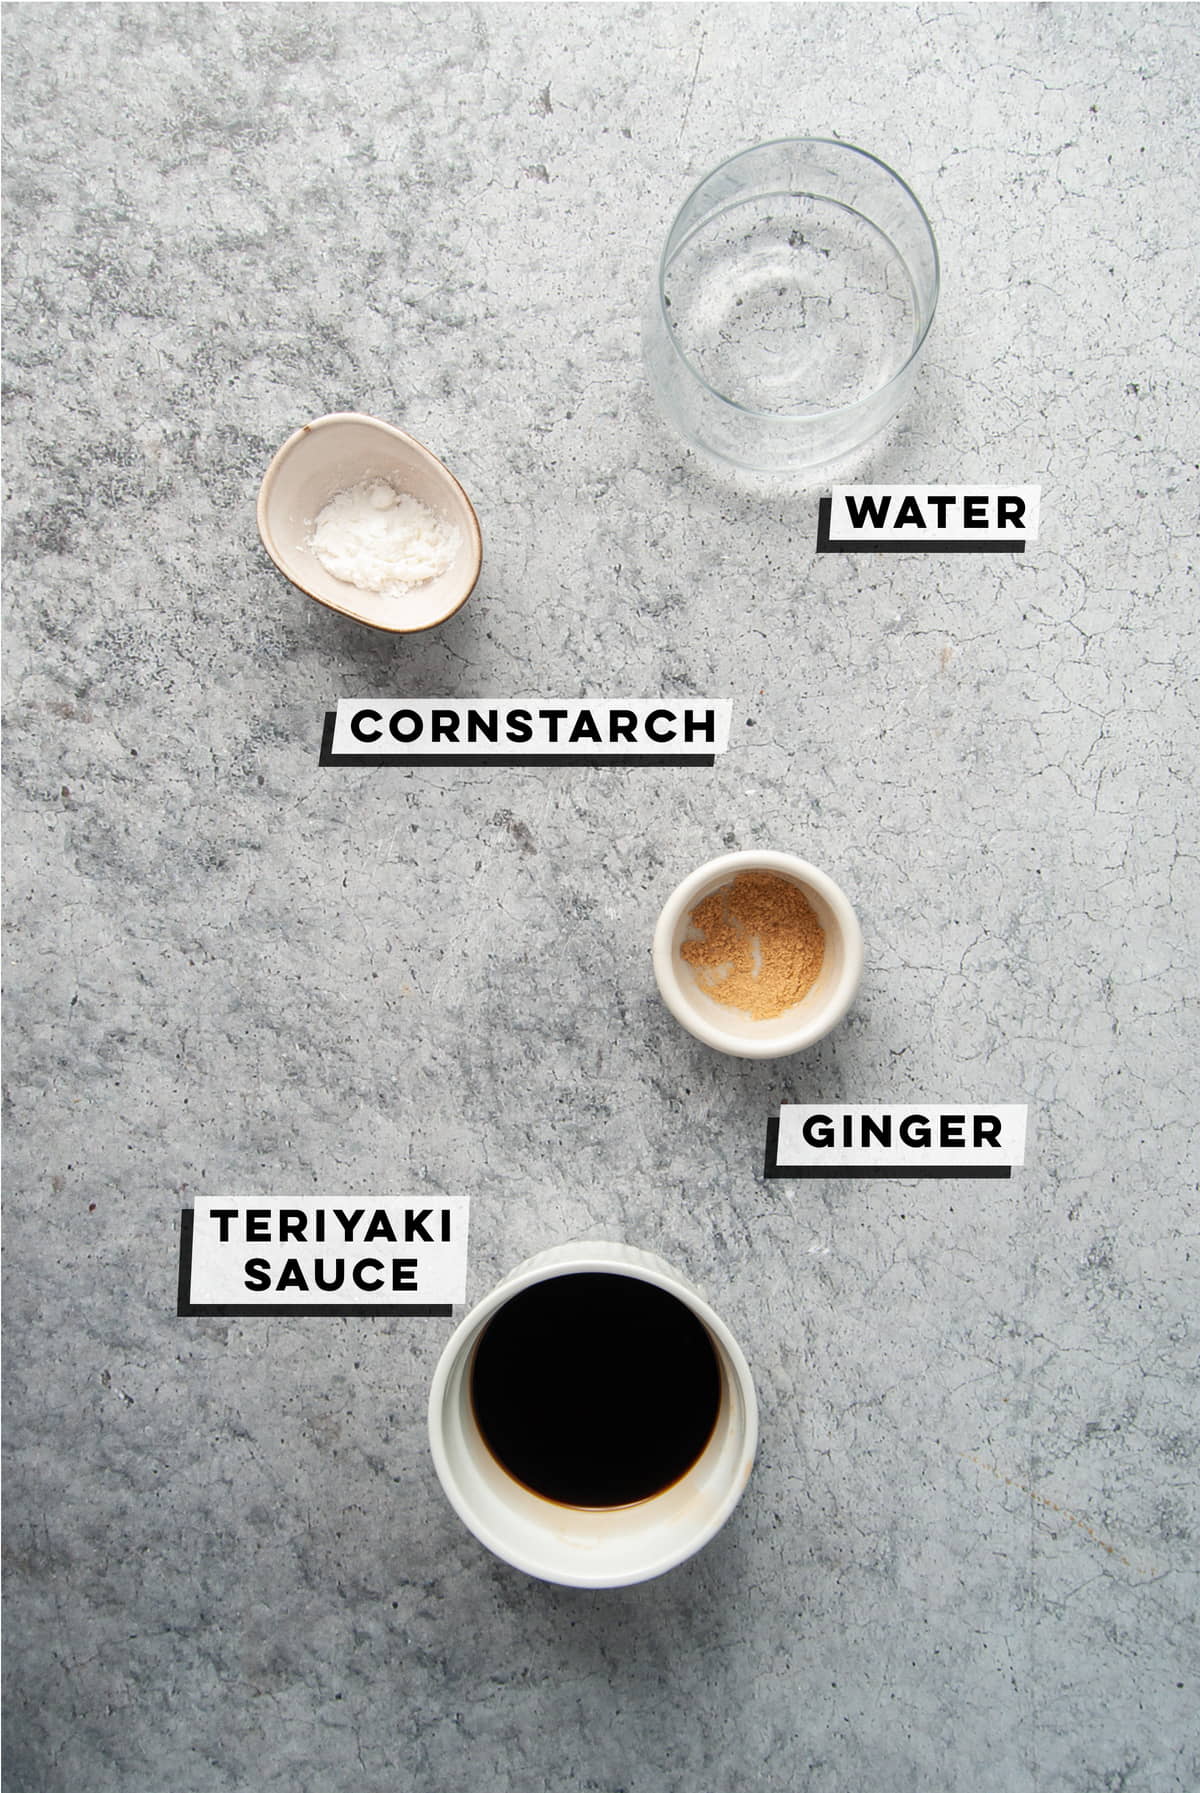 water, cornstarch, ginger, teriyaki sauce